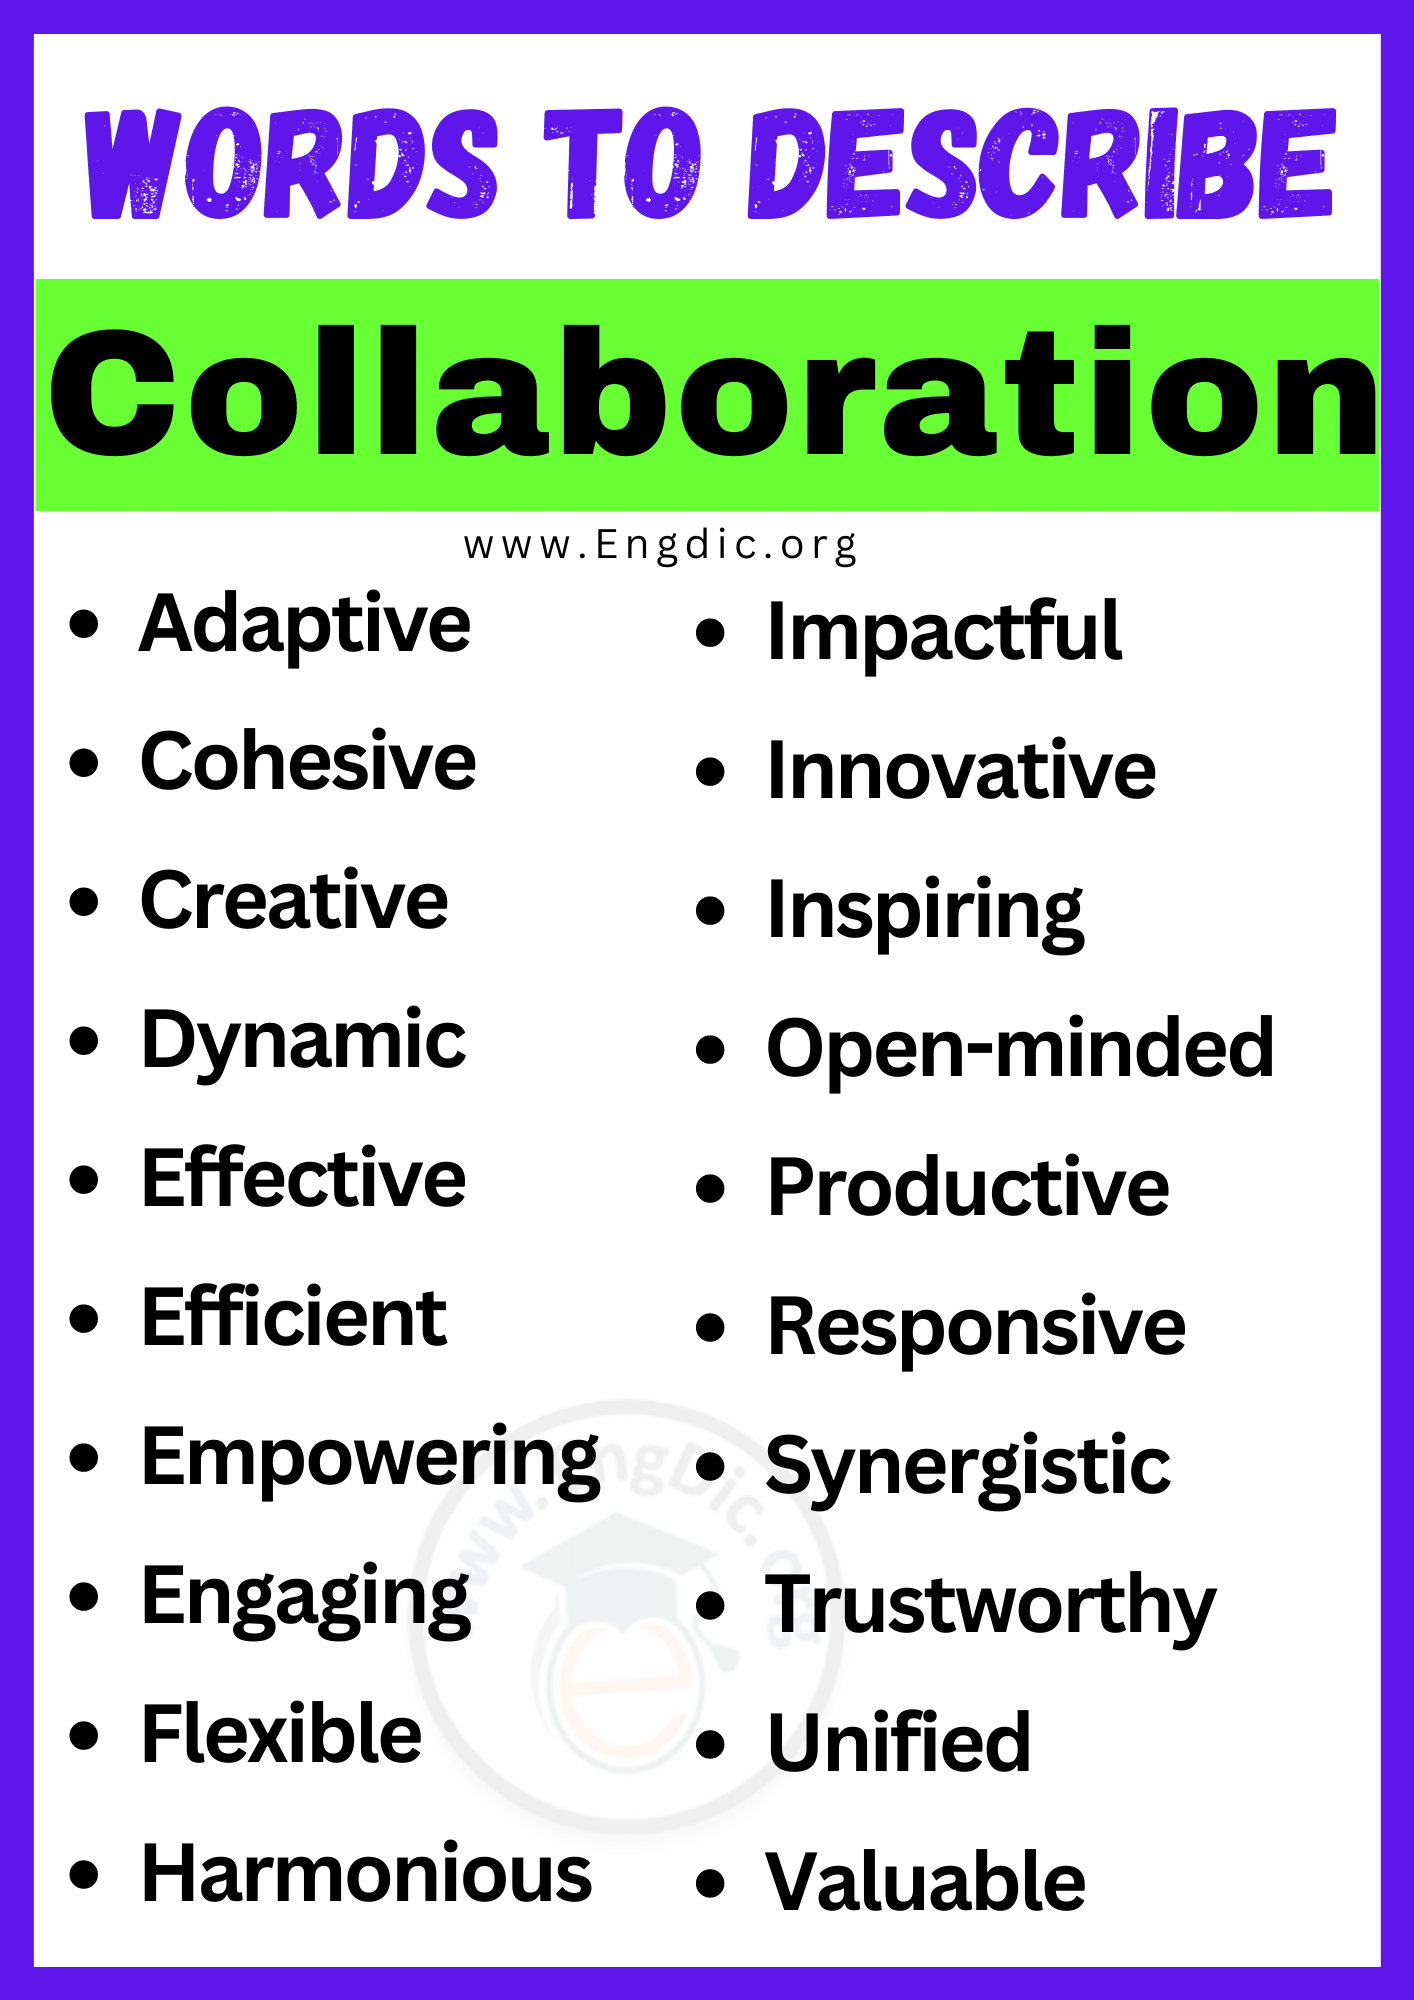 Words to Describe Collaboration